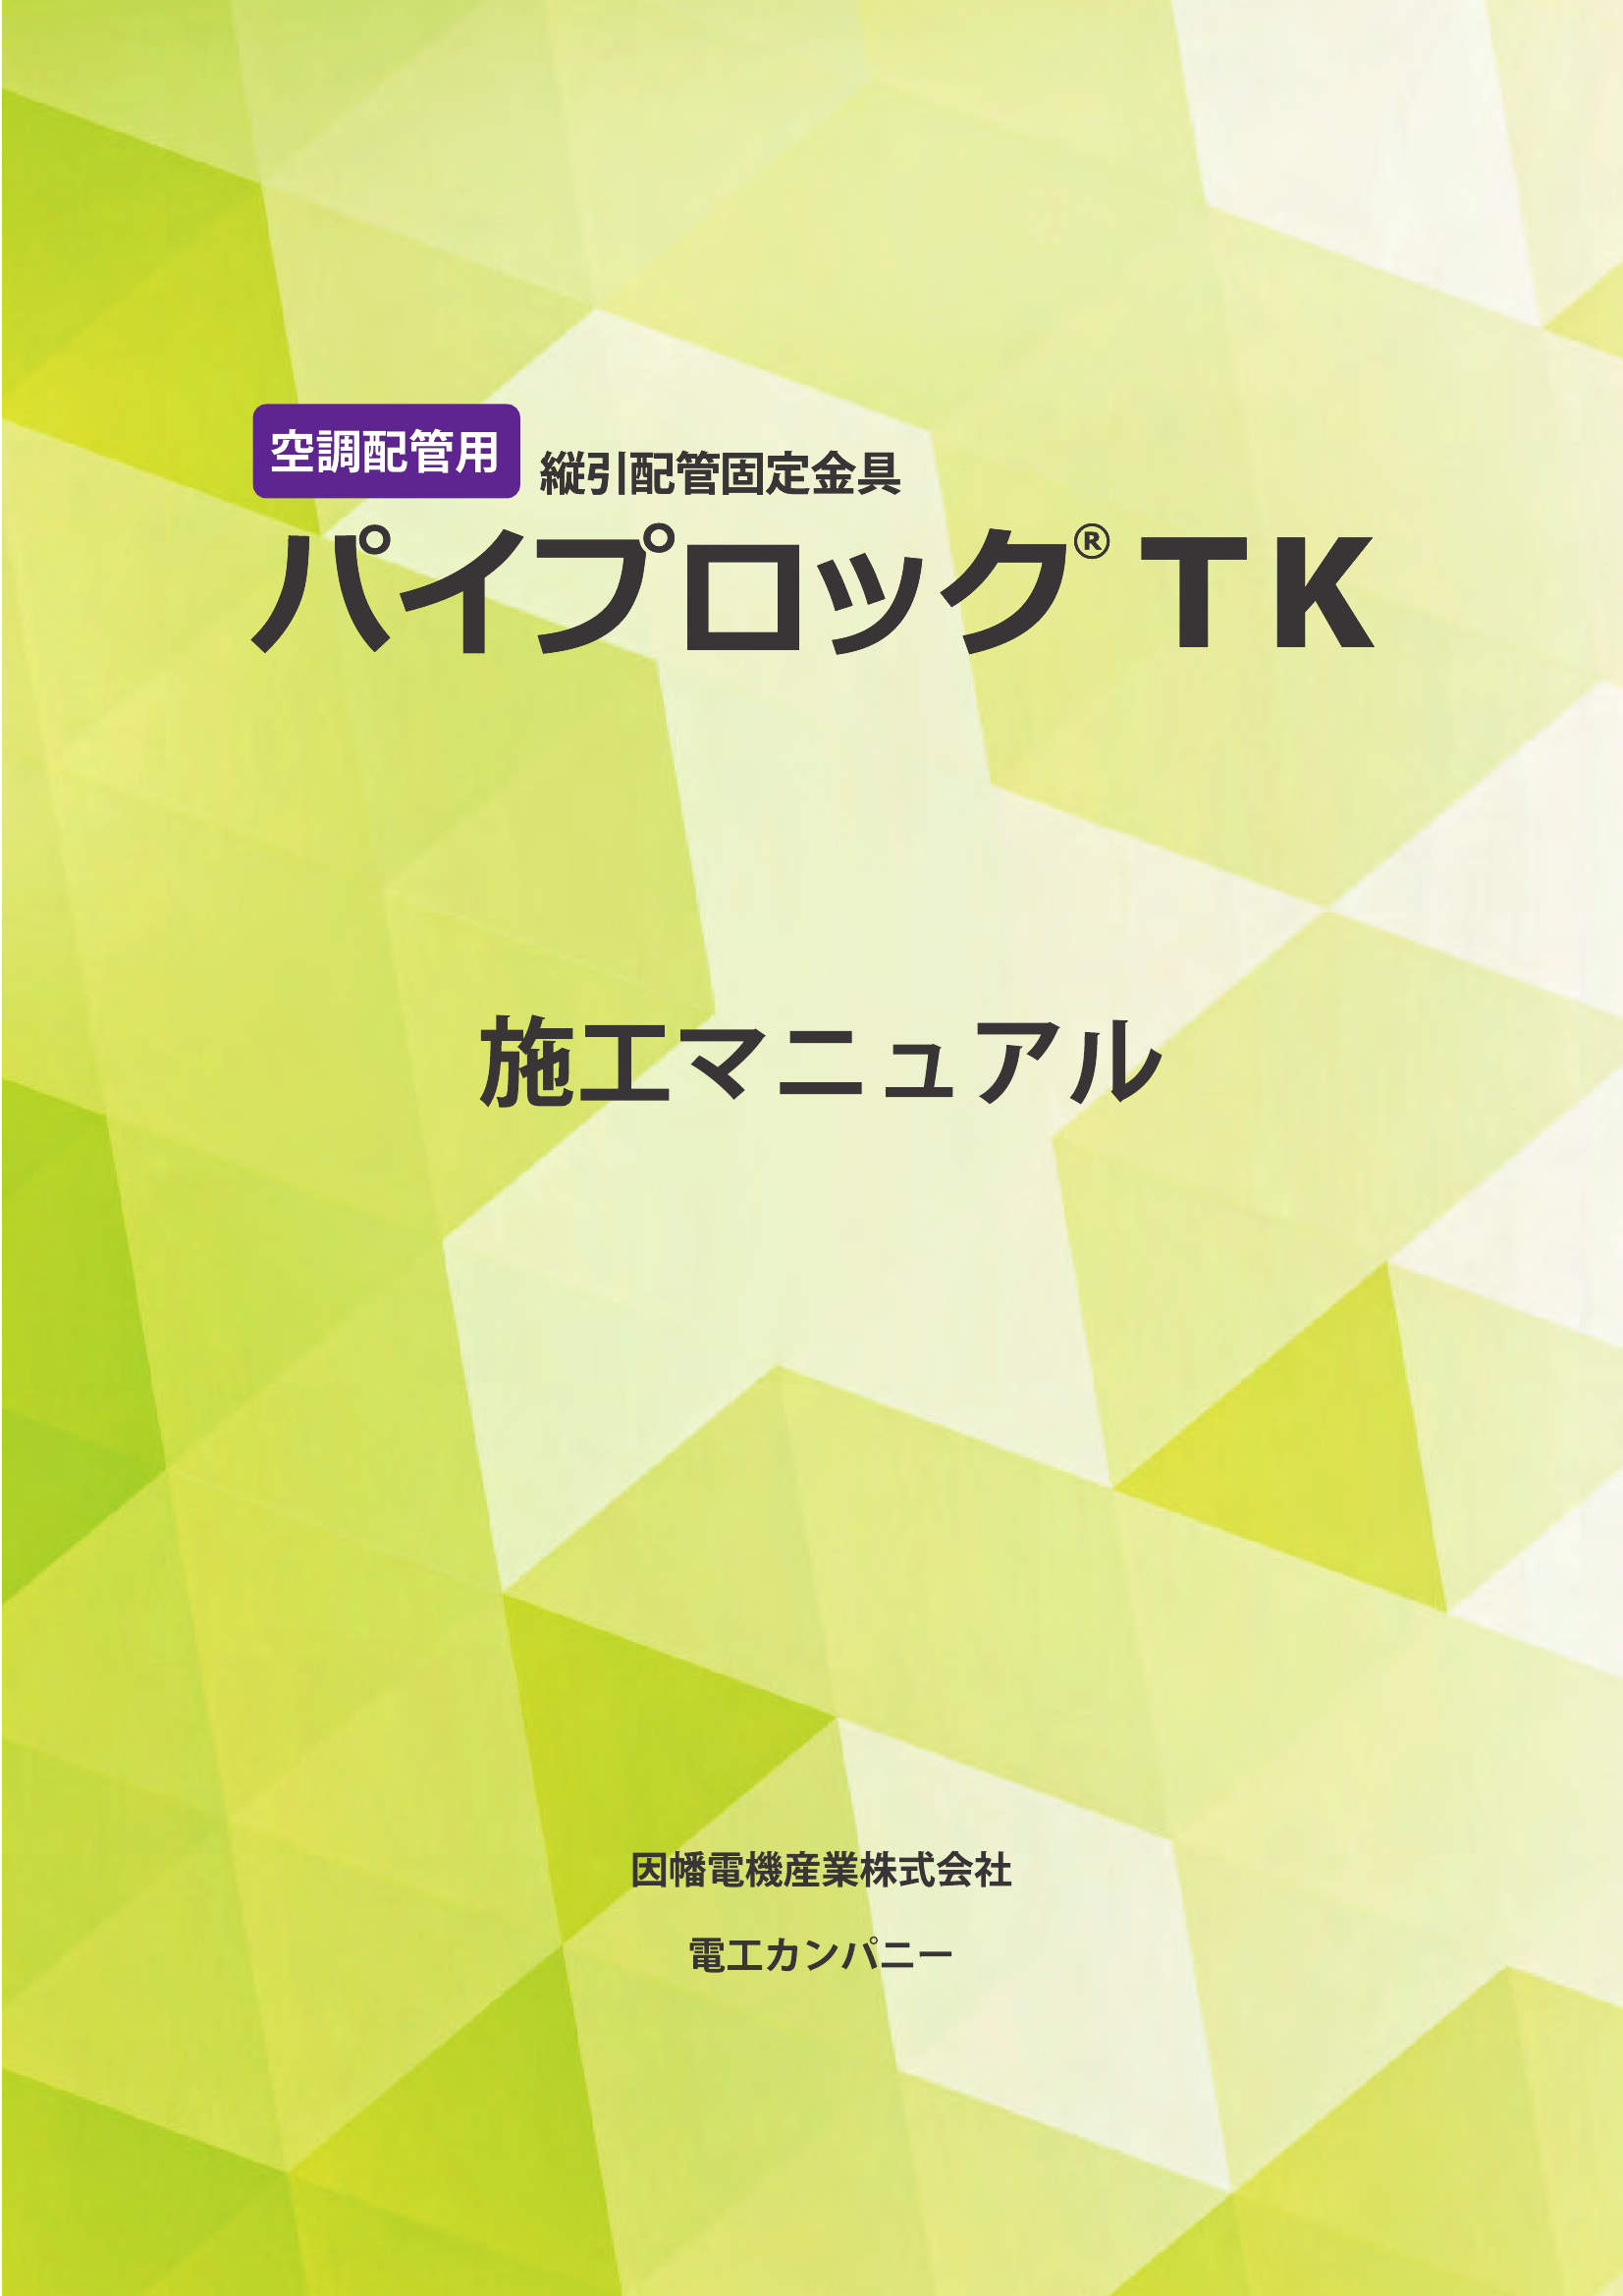 TK_施工要領手順書_20200110-00w.pdf